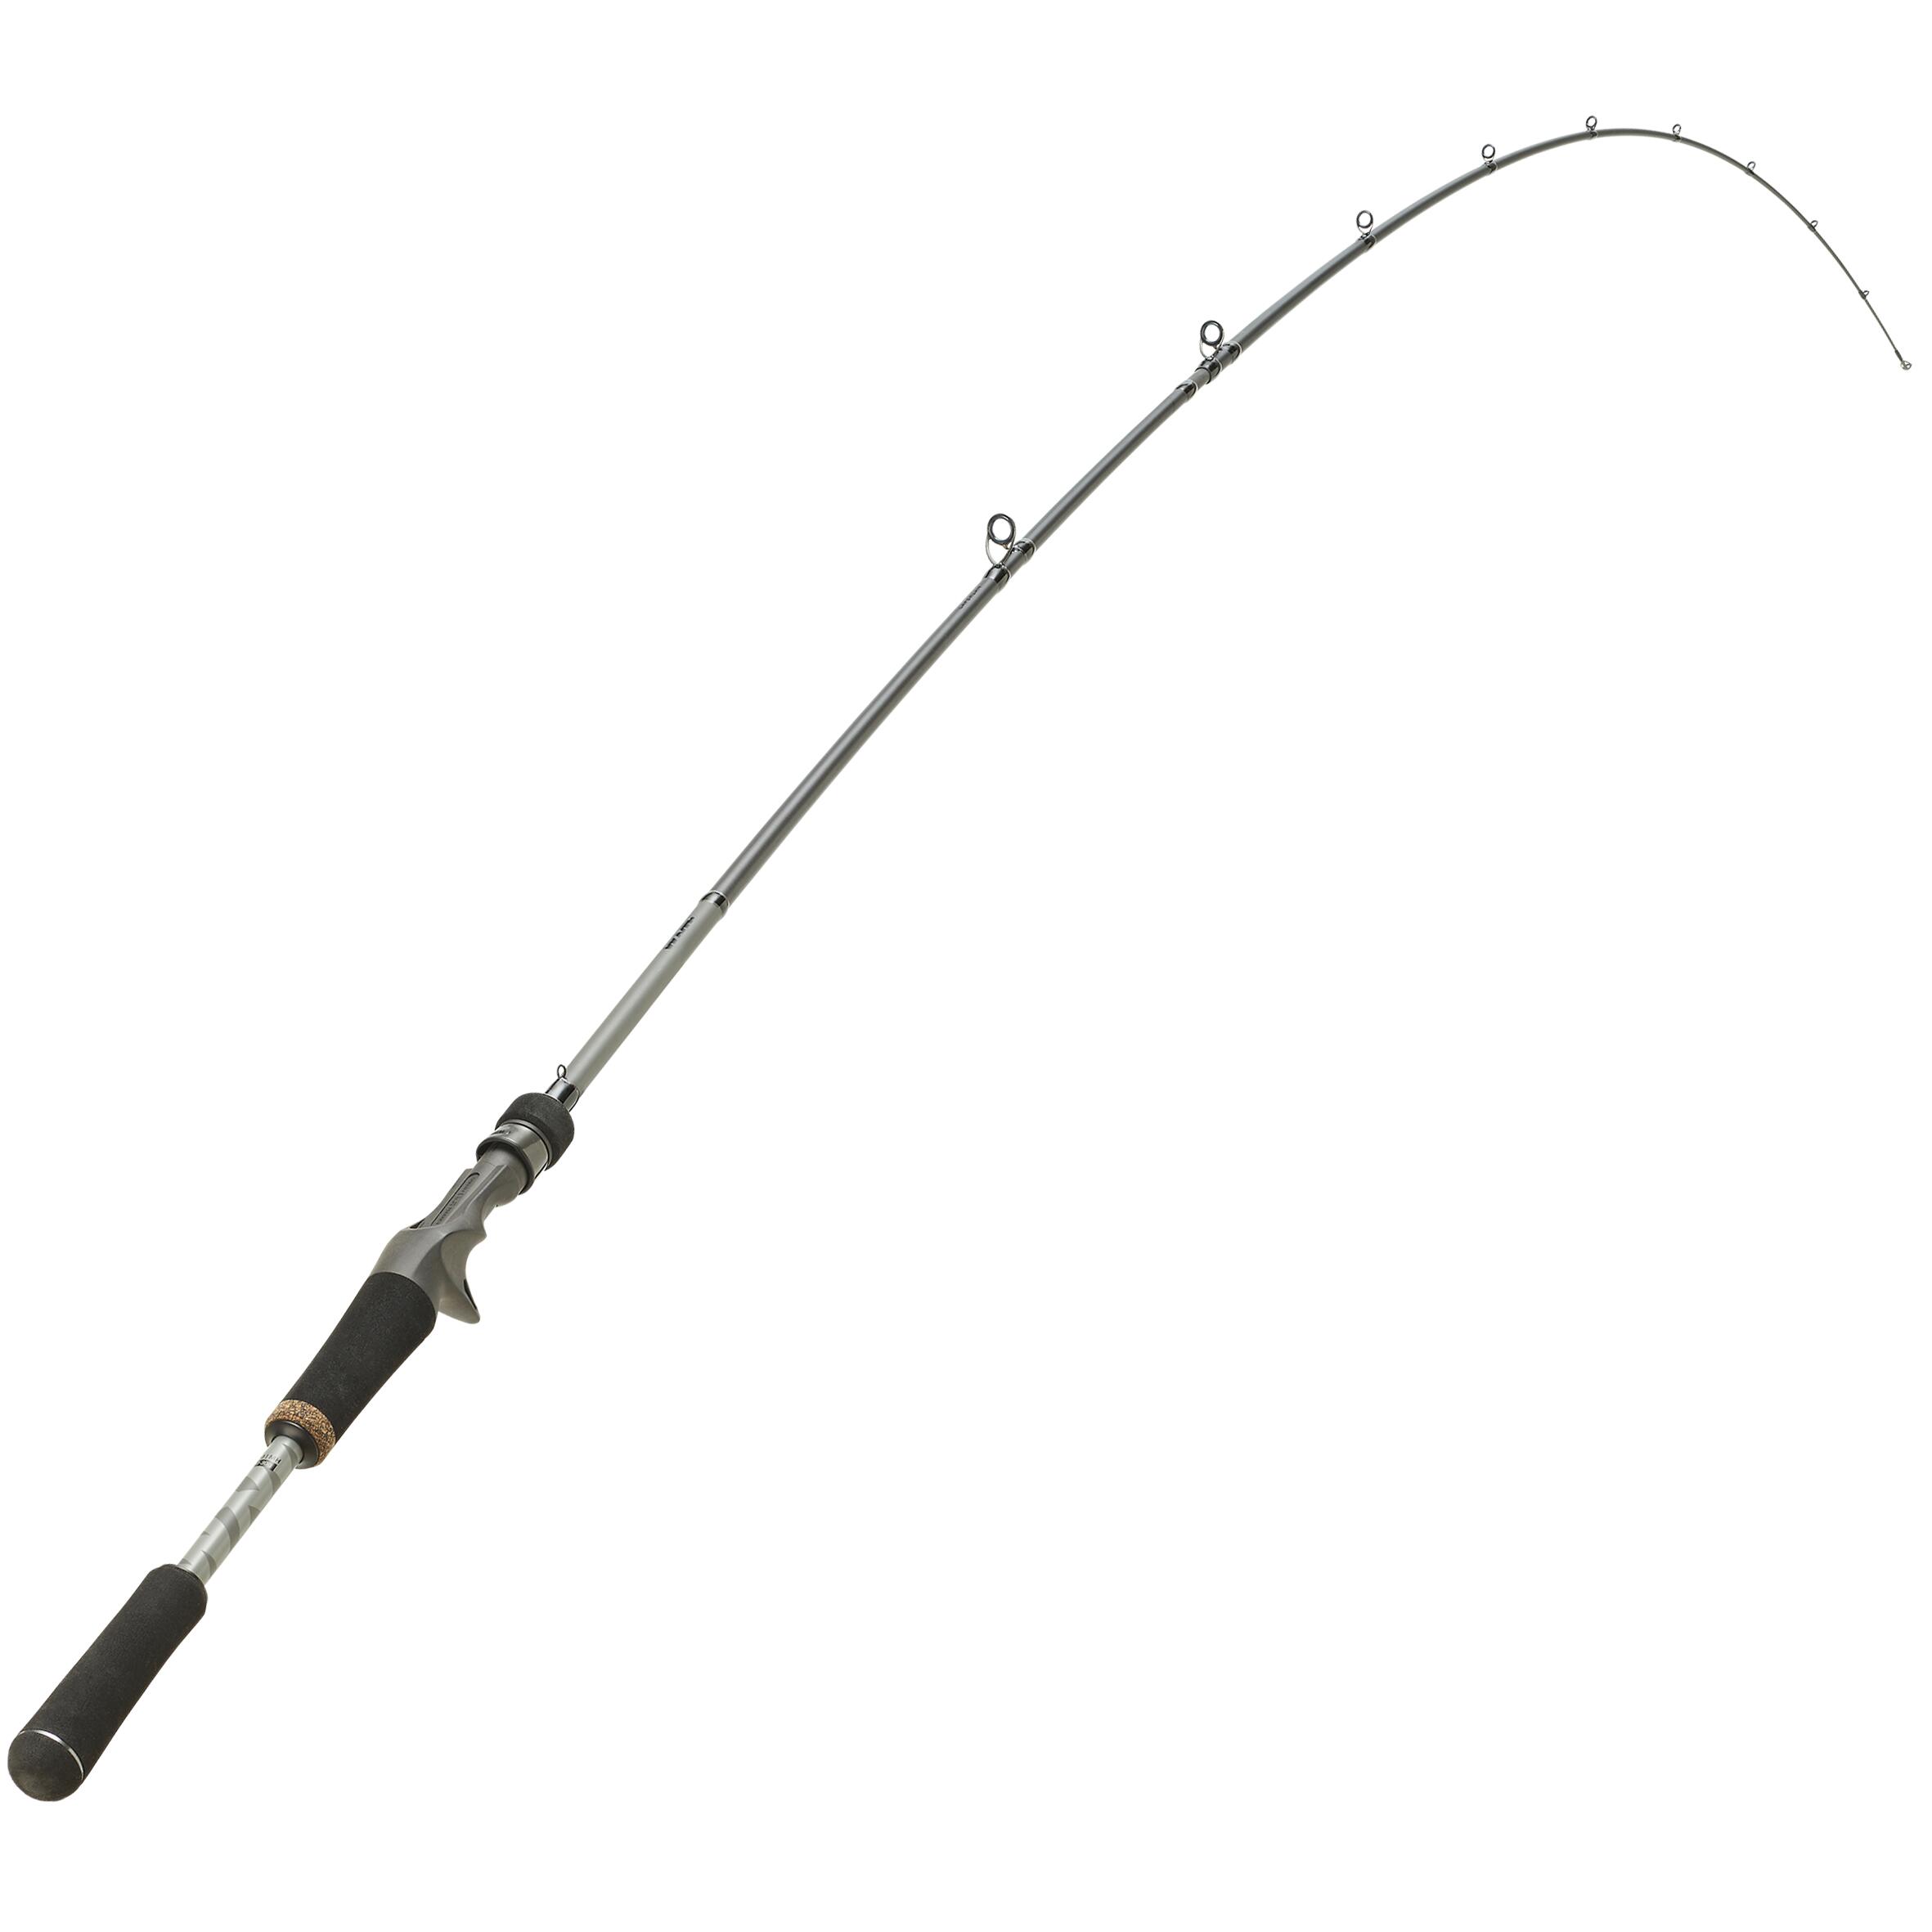 WXM-5 210 MH Casting Lure Fishing Rod - black, Grey - Caperlan - Decathlon